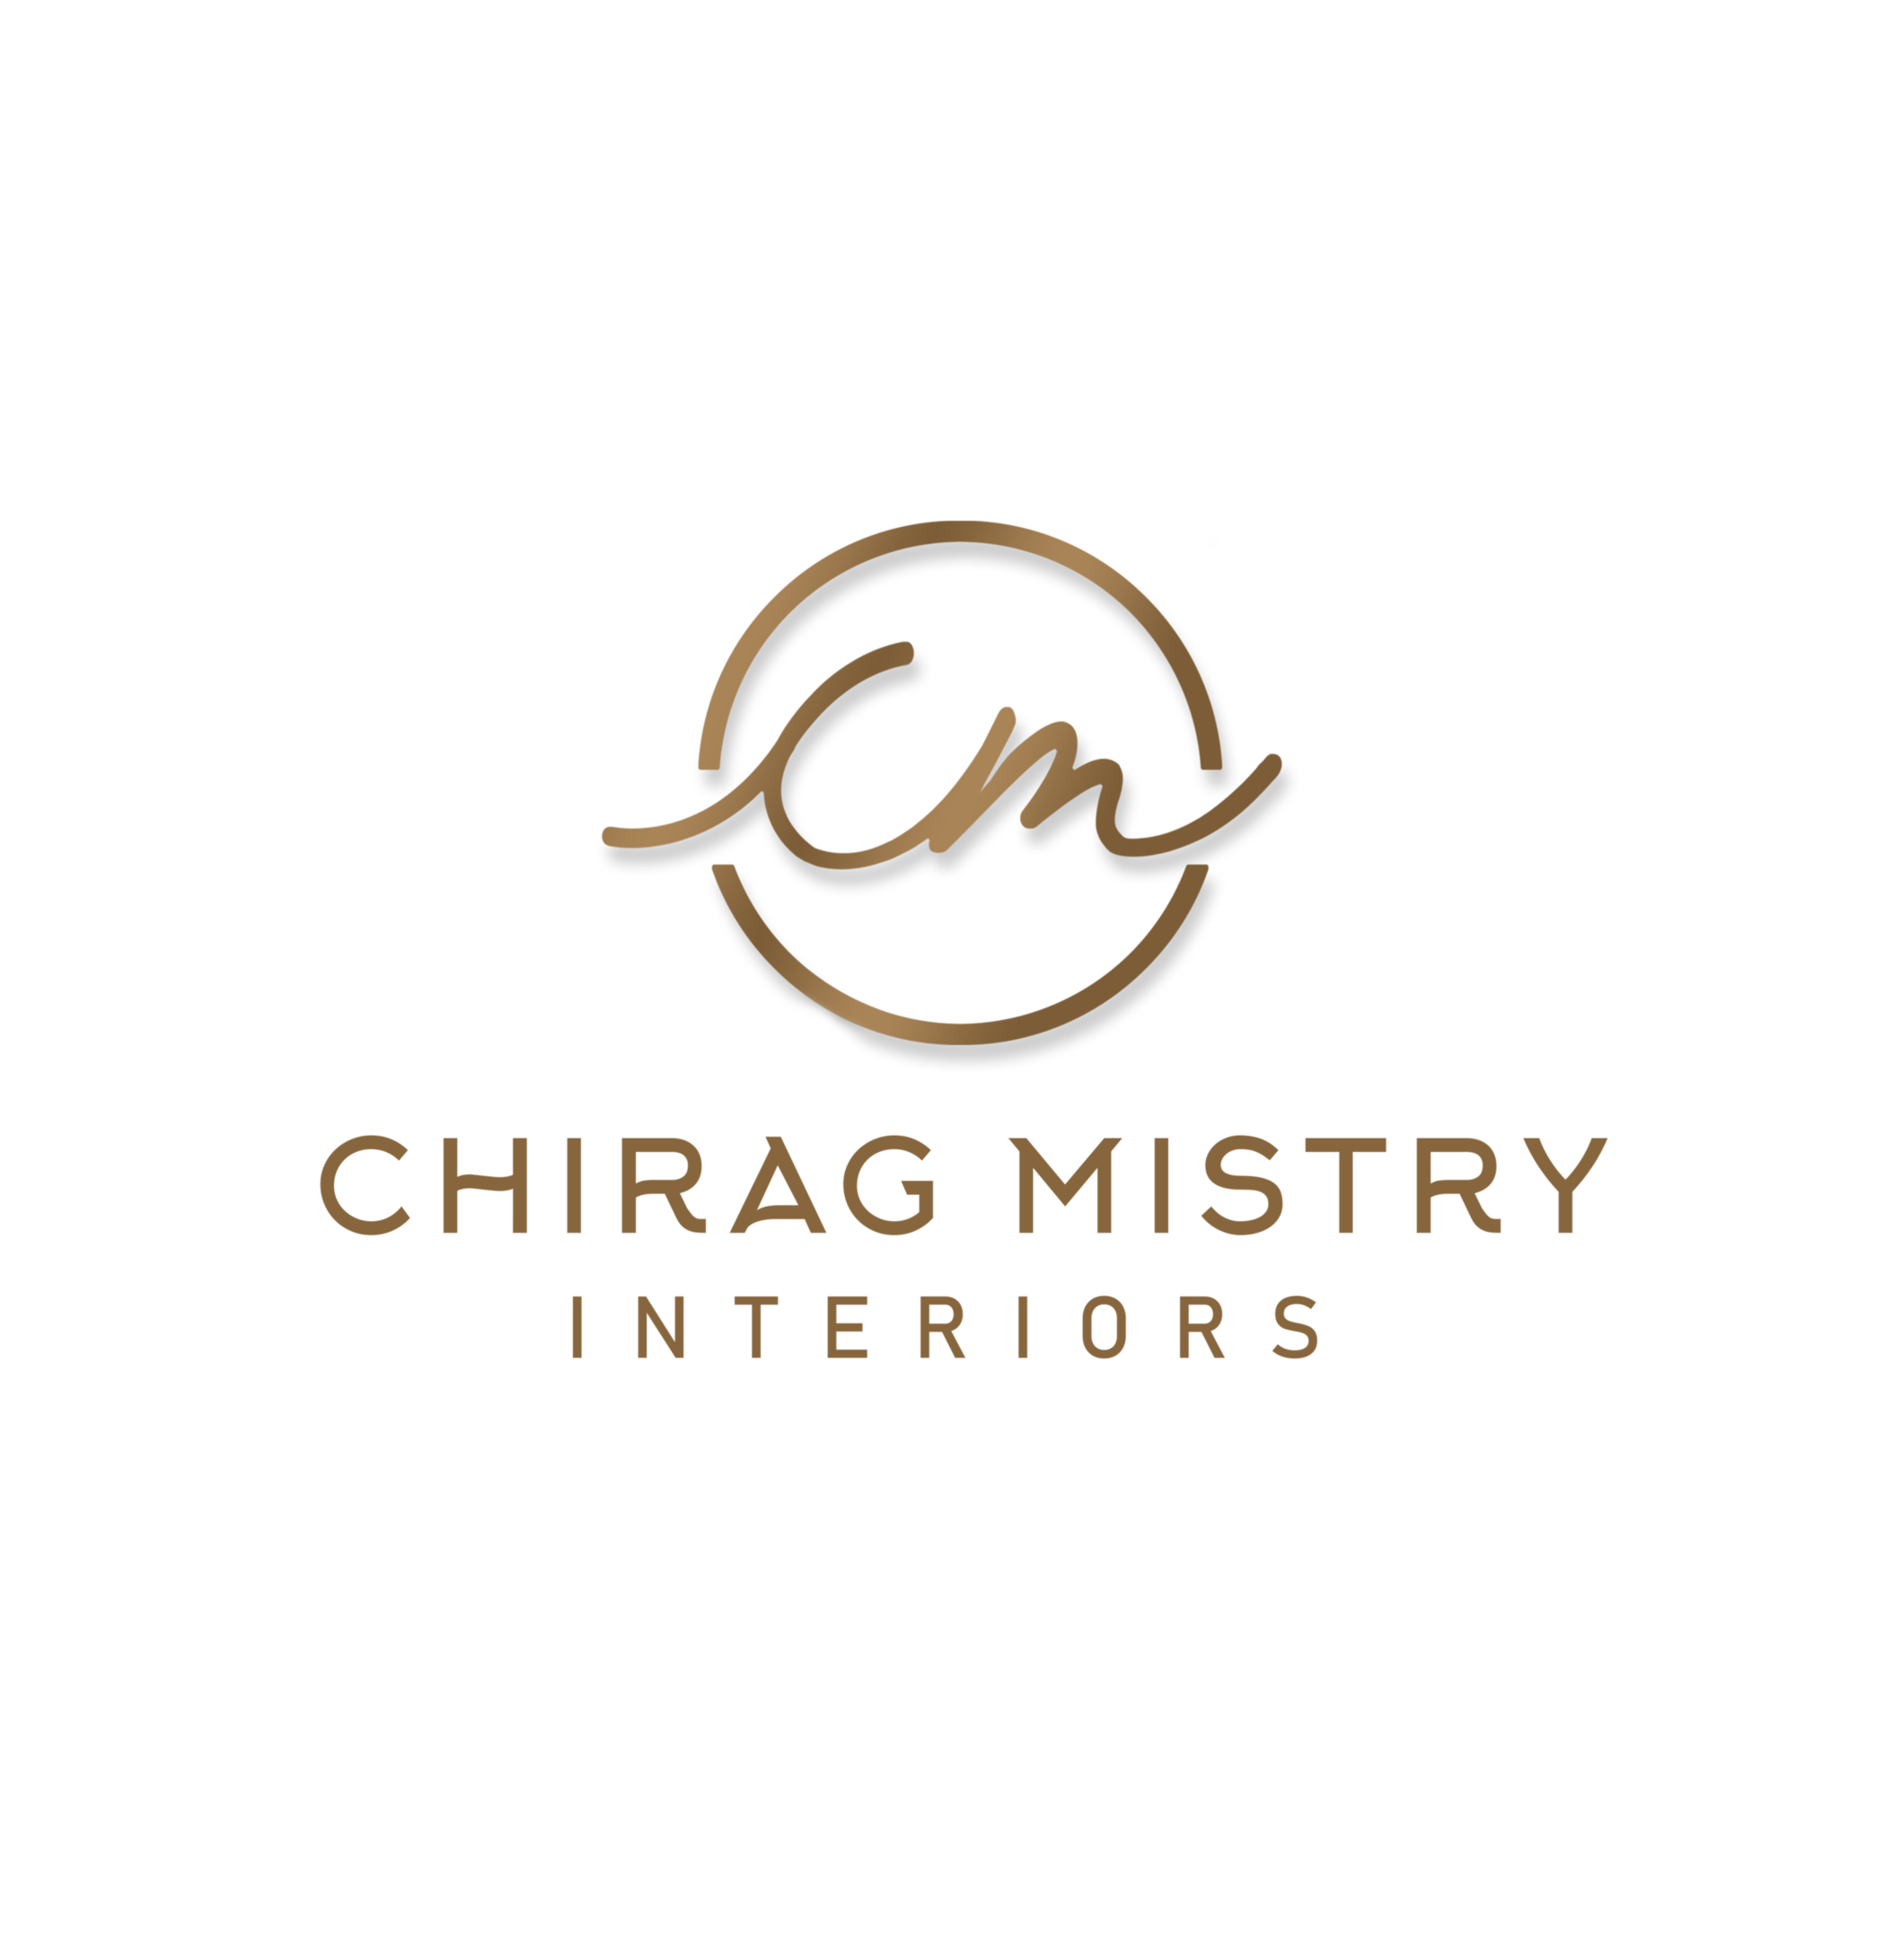 CHIRAG MISTRY INTERIORS